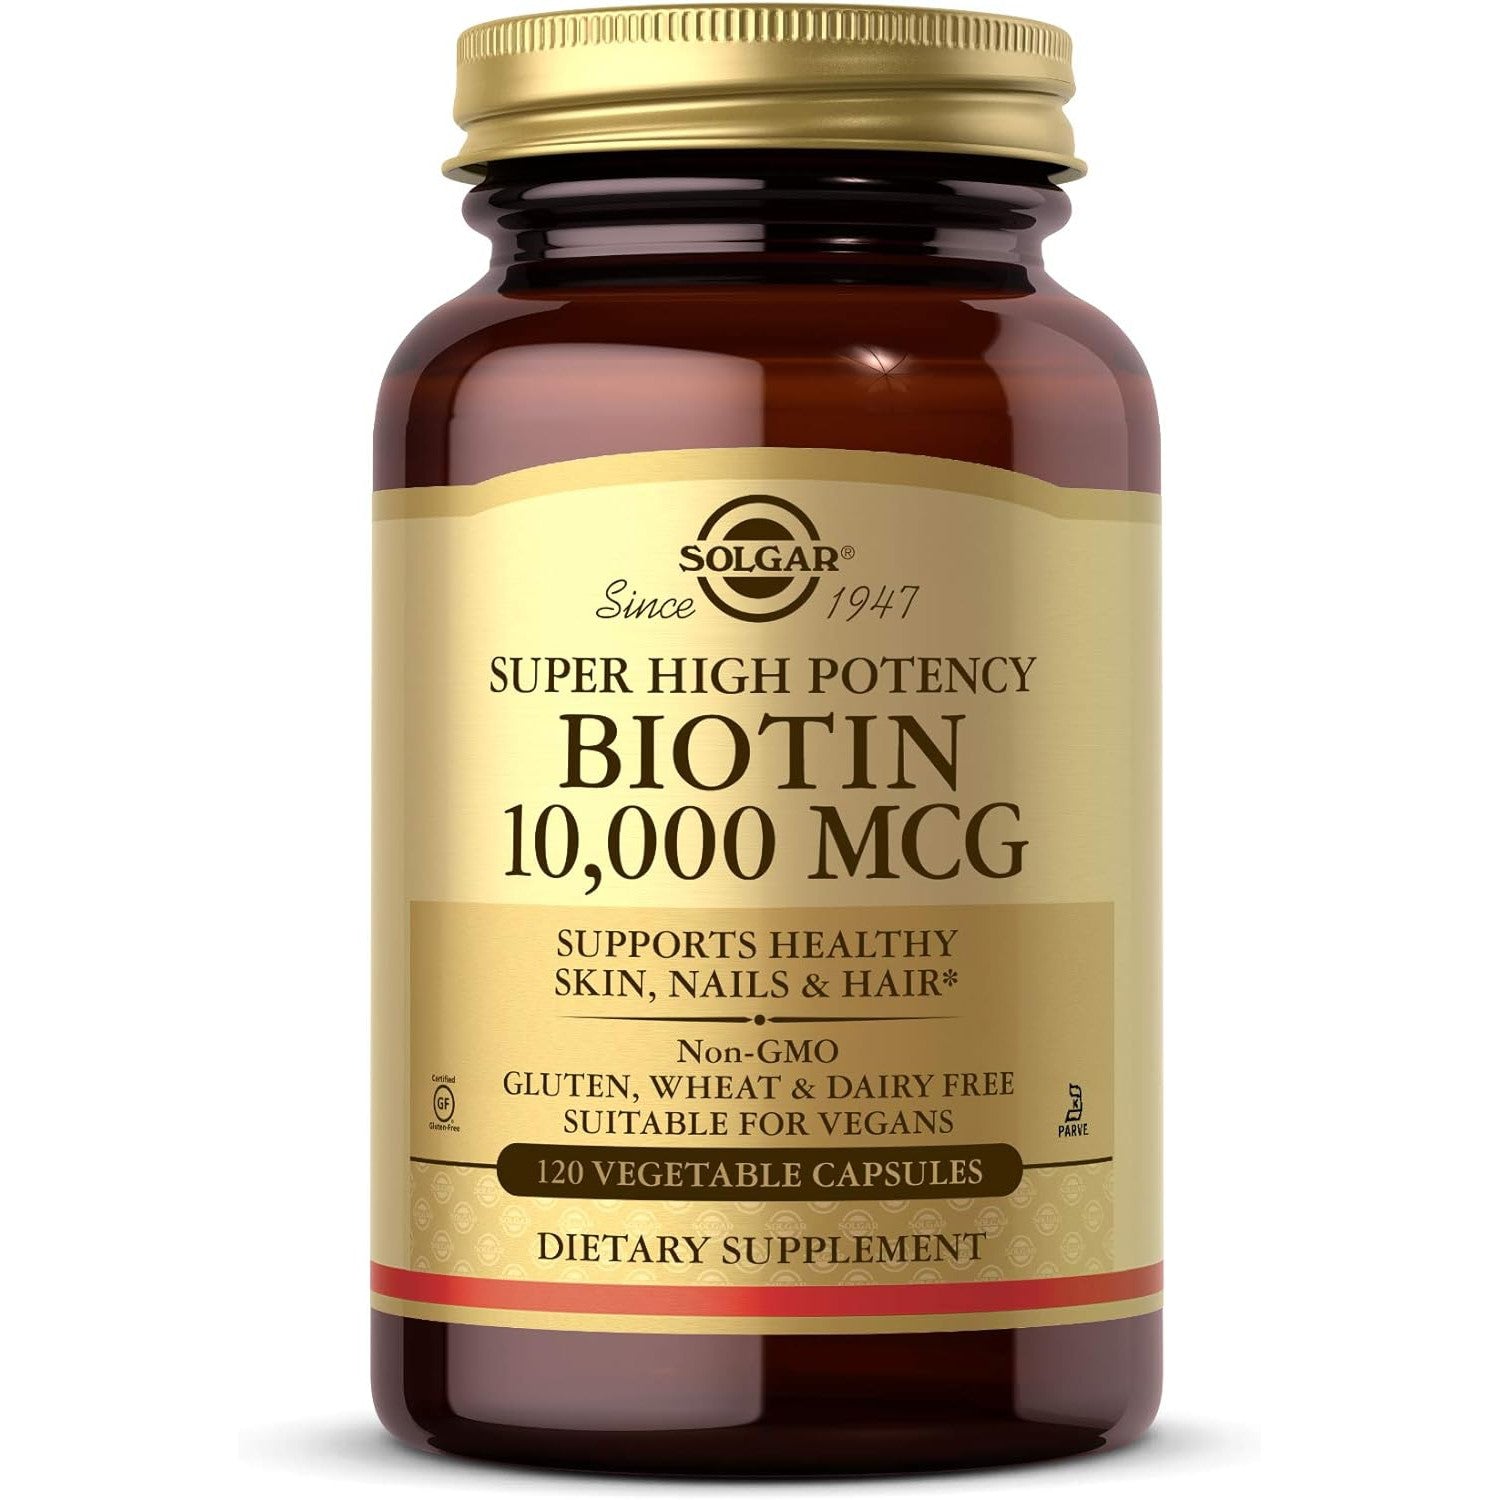 Solgar Super High Potency Biotin 10,000 MCG Promotes Healthy Skin, Nails & Hair - Super High Potency - Non-GMO, Vegan, Gluten, Dairy Free 120 Vegetable Capsules